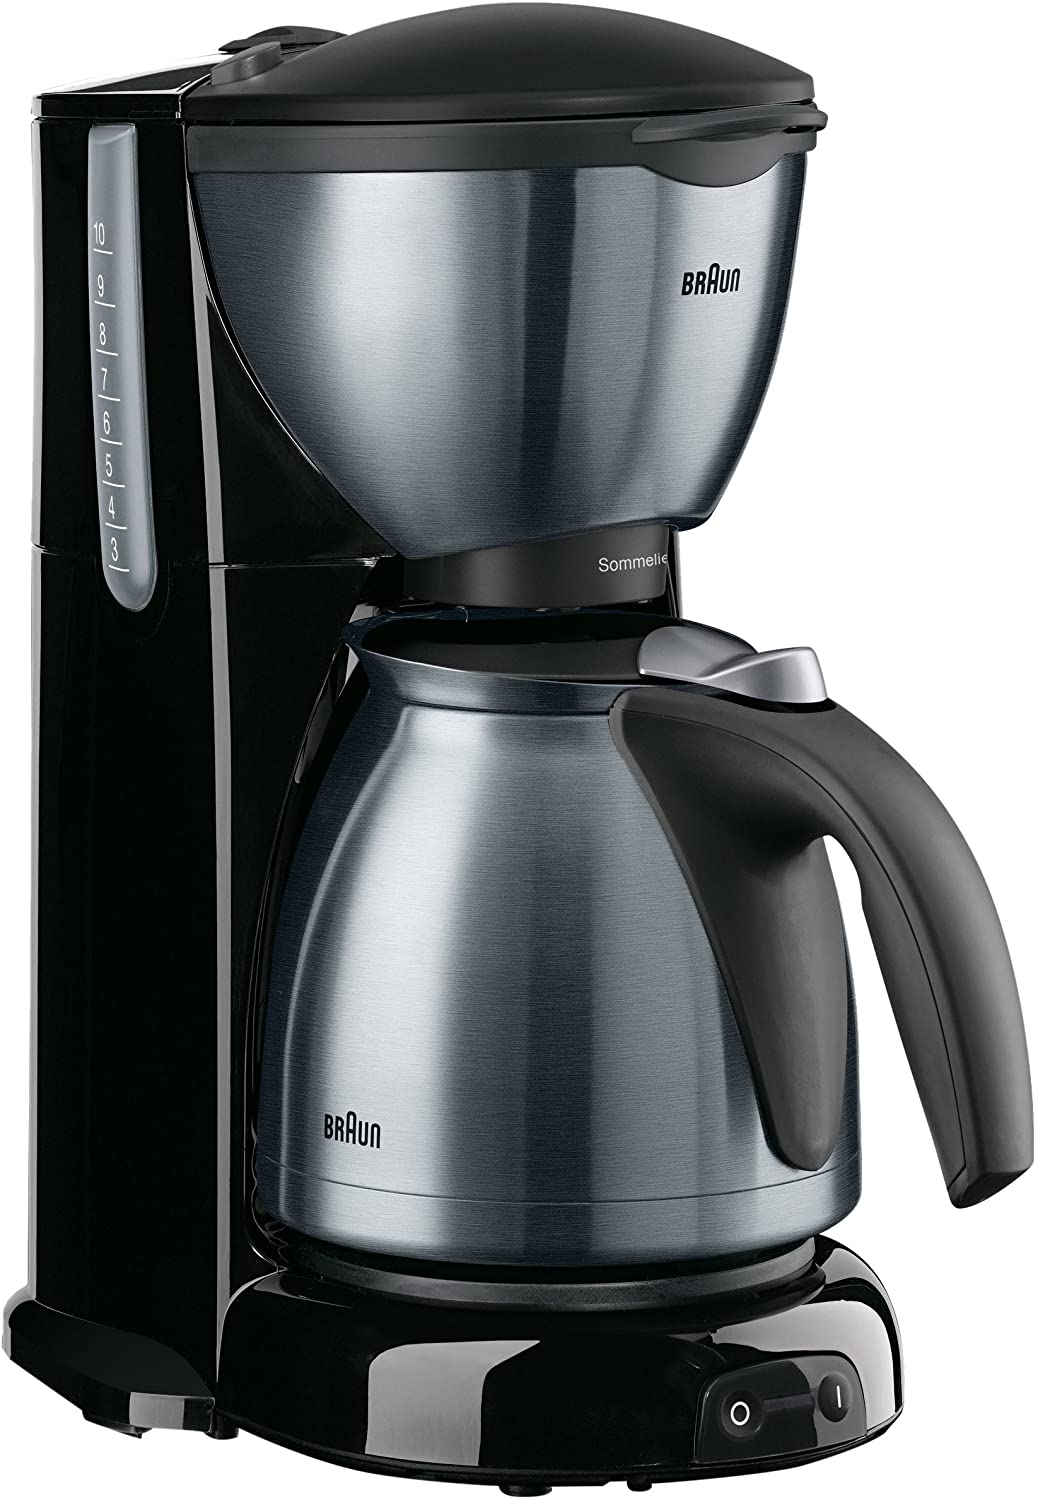 https://aghezty.com/en/products/Coffee---Espresso-Makers/Black-Decker-Coffee-Machine-Travel-Mug650-WBlack-DCT10-B5-25413/uploads/product/2021-08-19/11.jpg